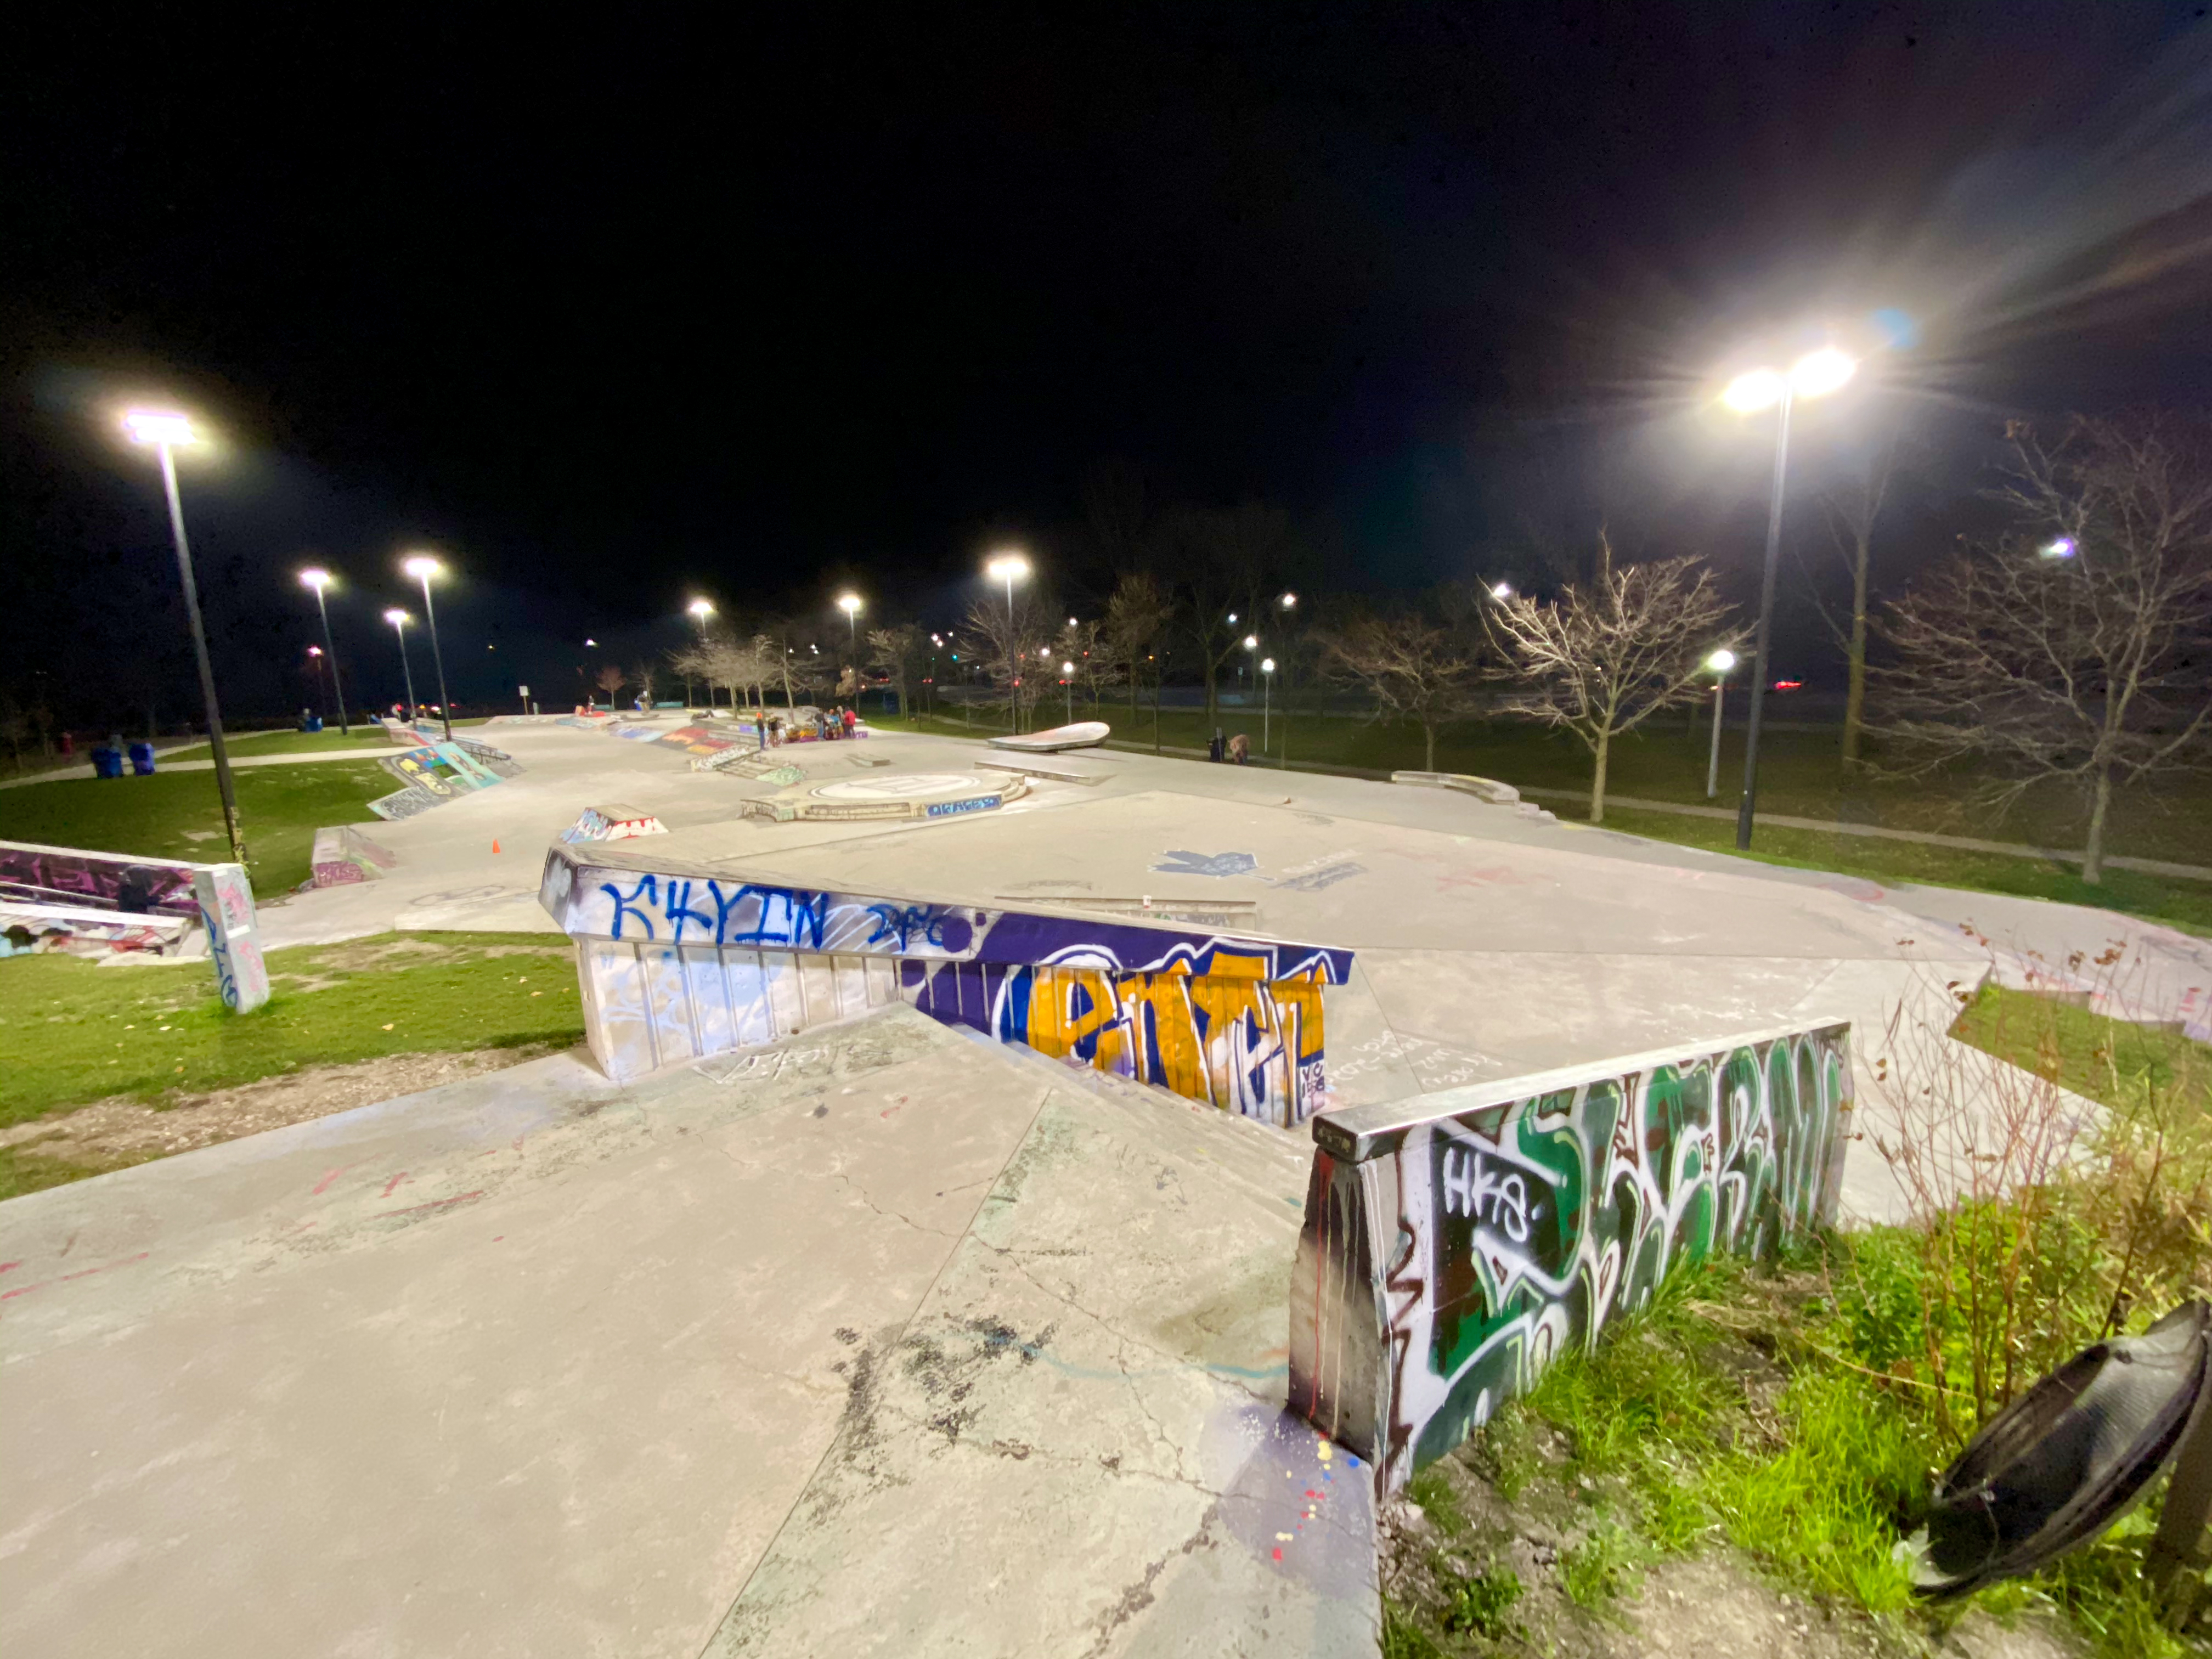 Toronto Beaches skatepark at night